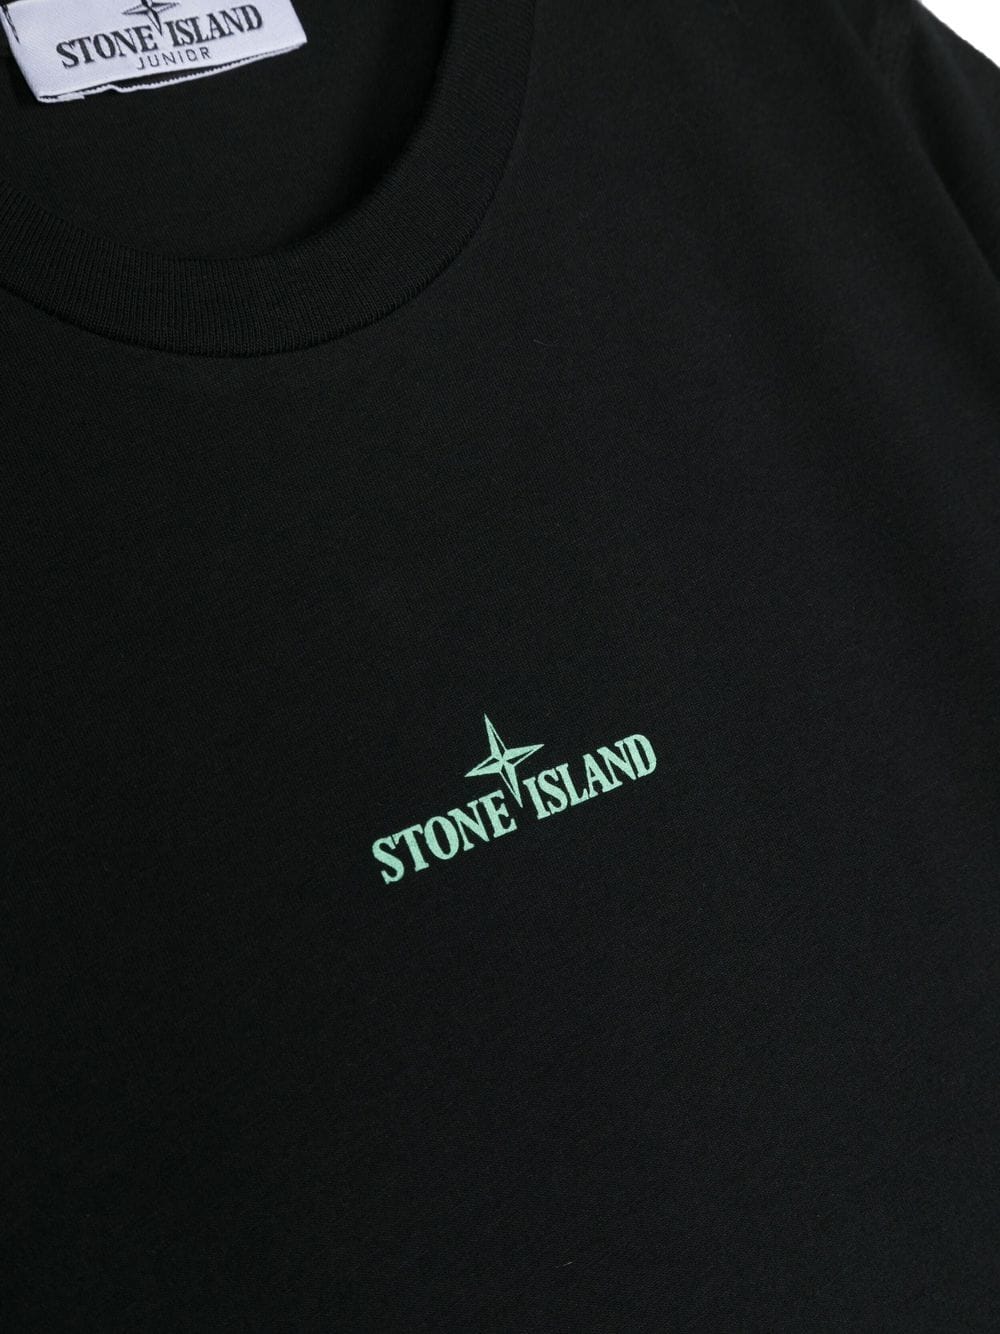 Stone Island Compass Logo Tee Black